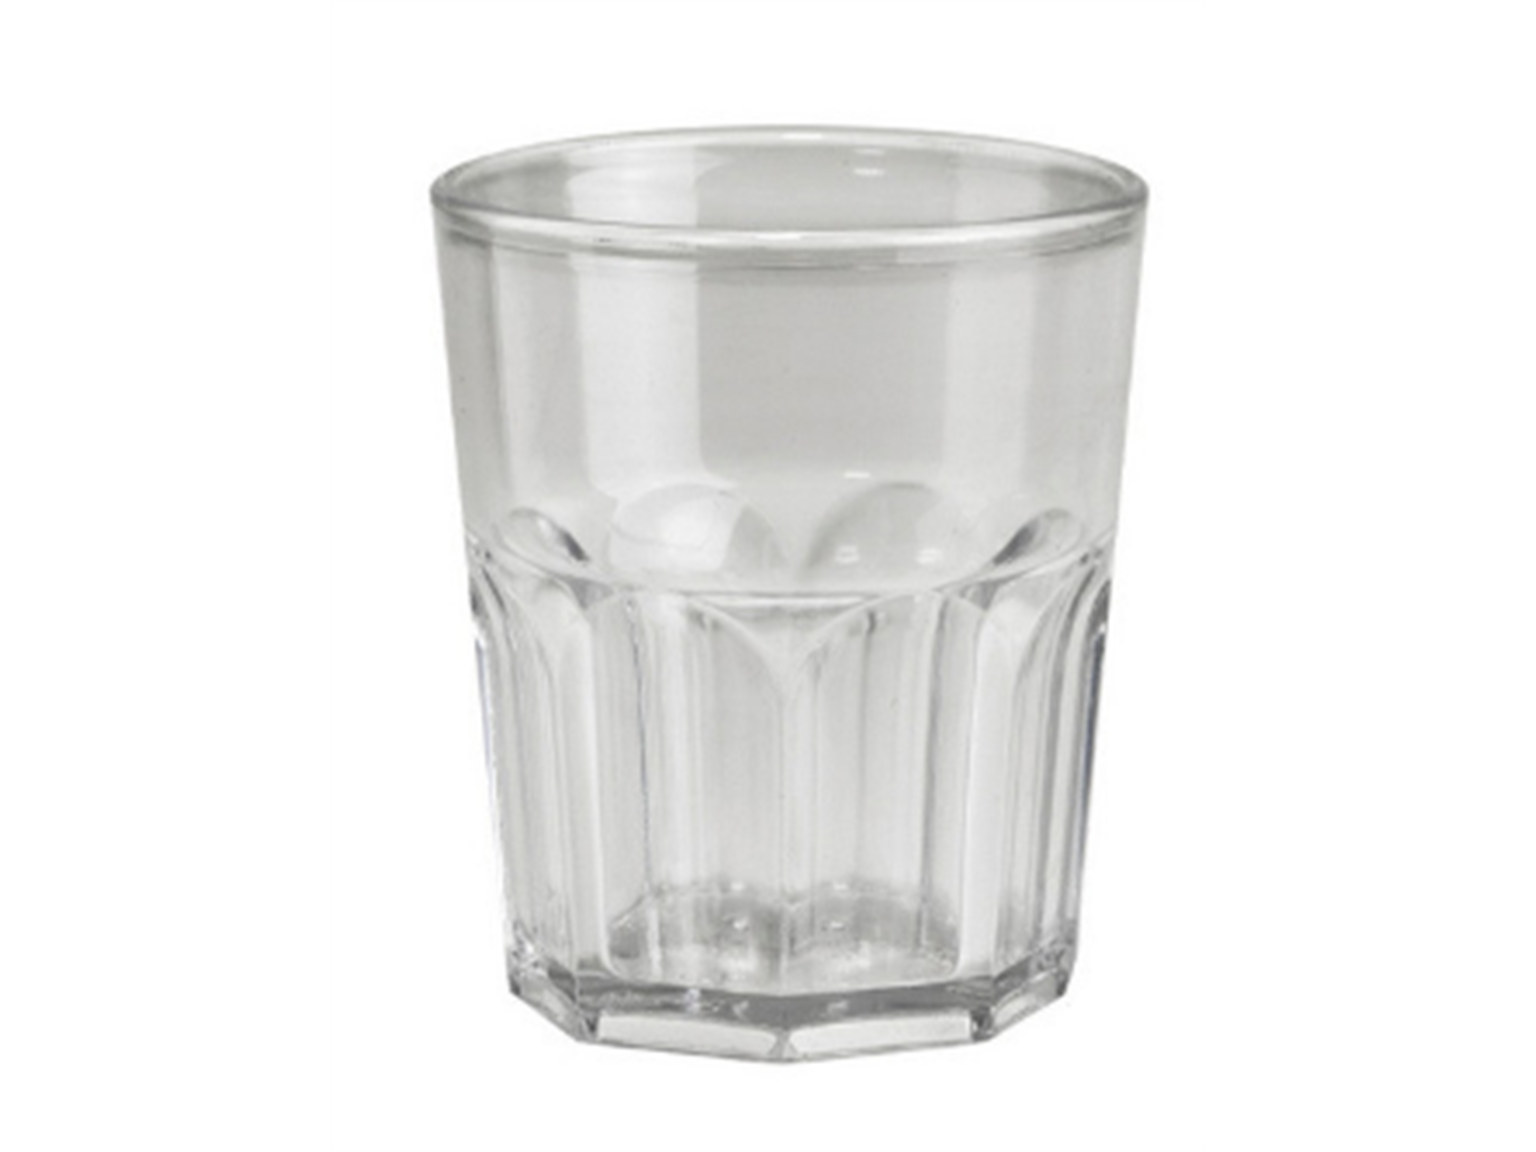 Minidrinkglas mehrweg, transparent Inhalt 160 cc aus Kunststoff